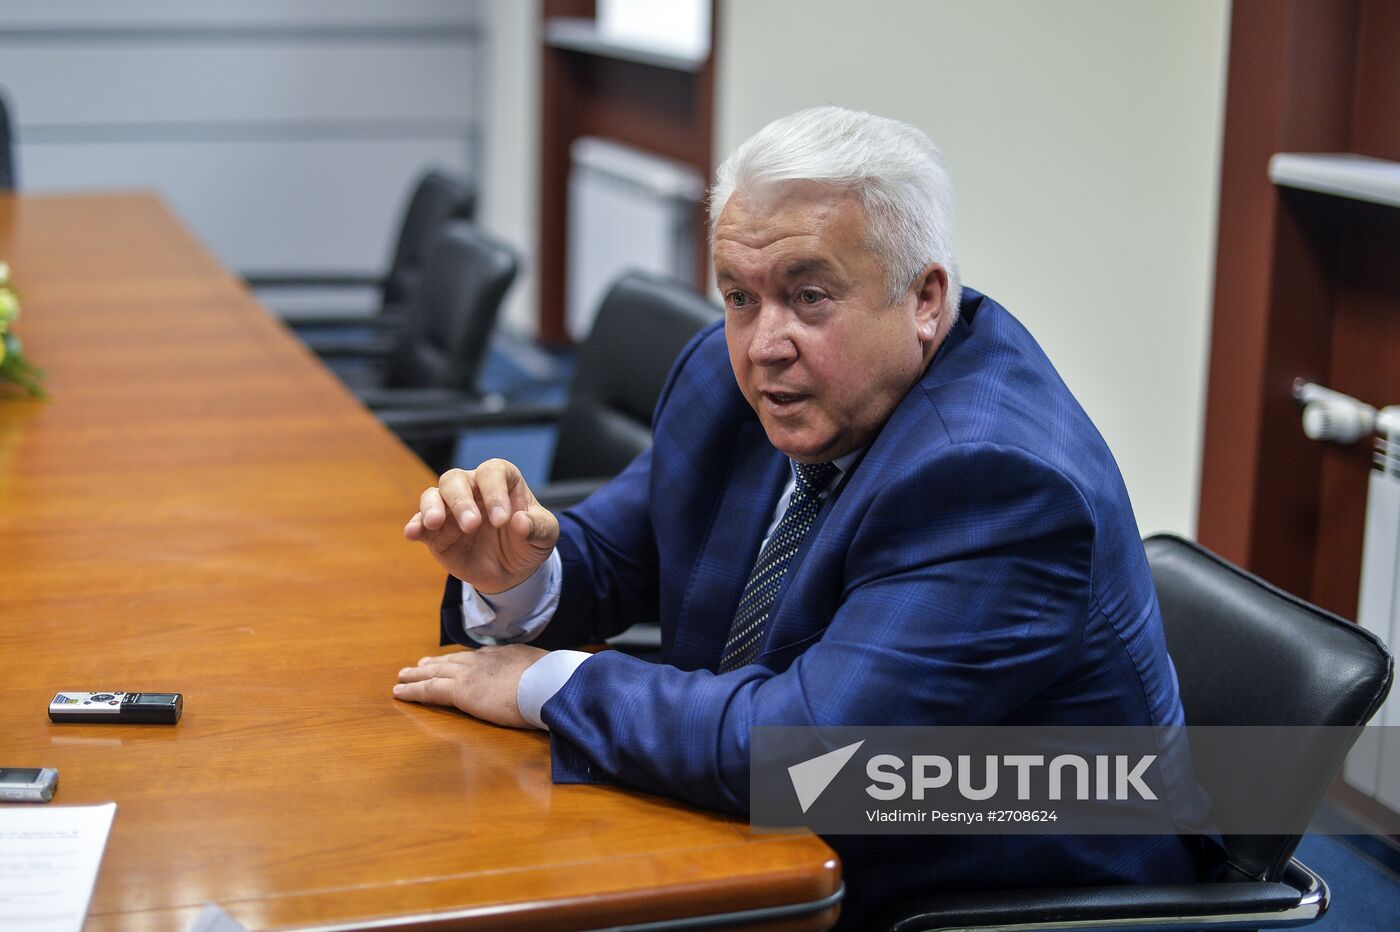 Former People's Deputy of Ukraine's Verkhovna Rada Vladimir Oleinik